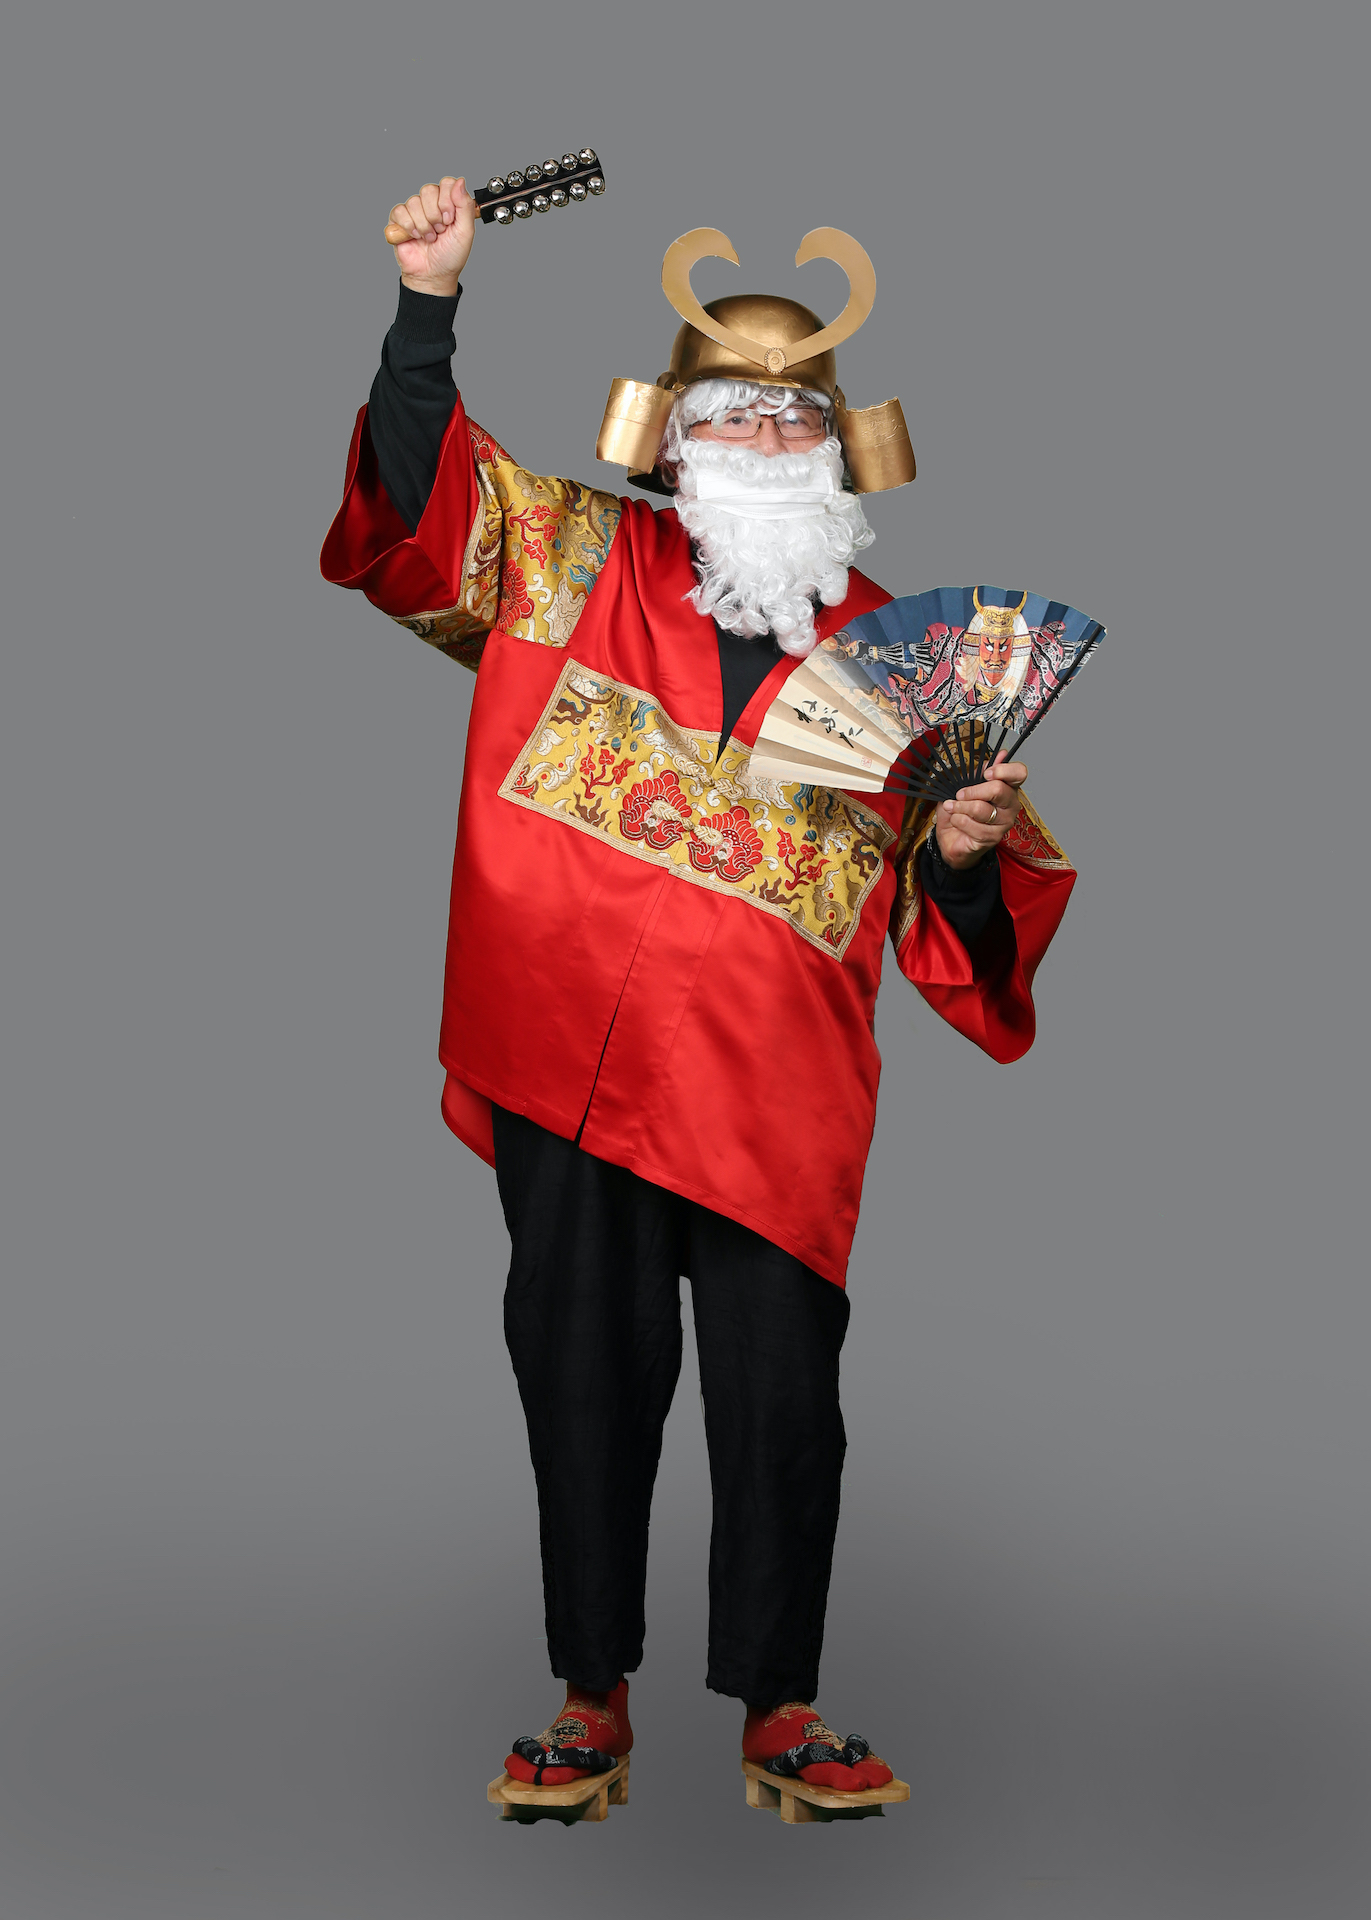 Go Little Tokyo Shogun Santa Visits